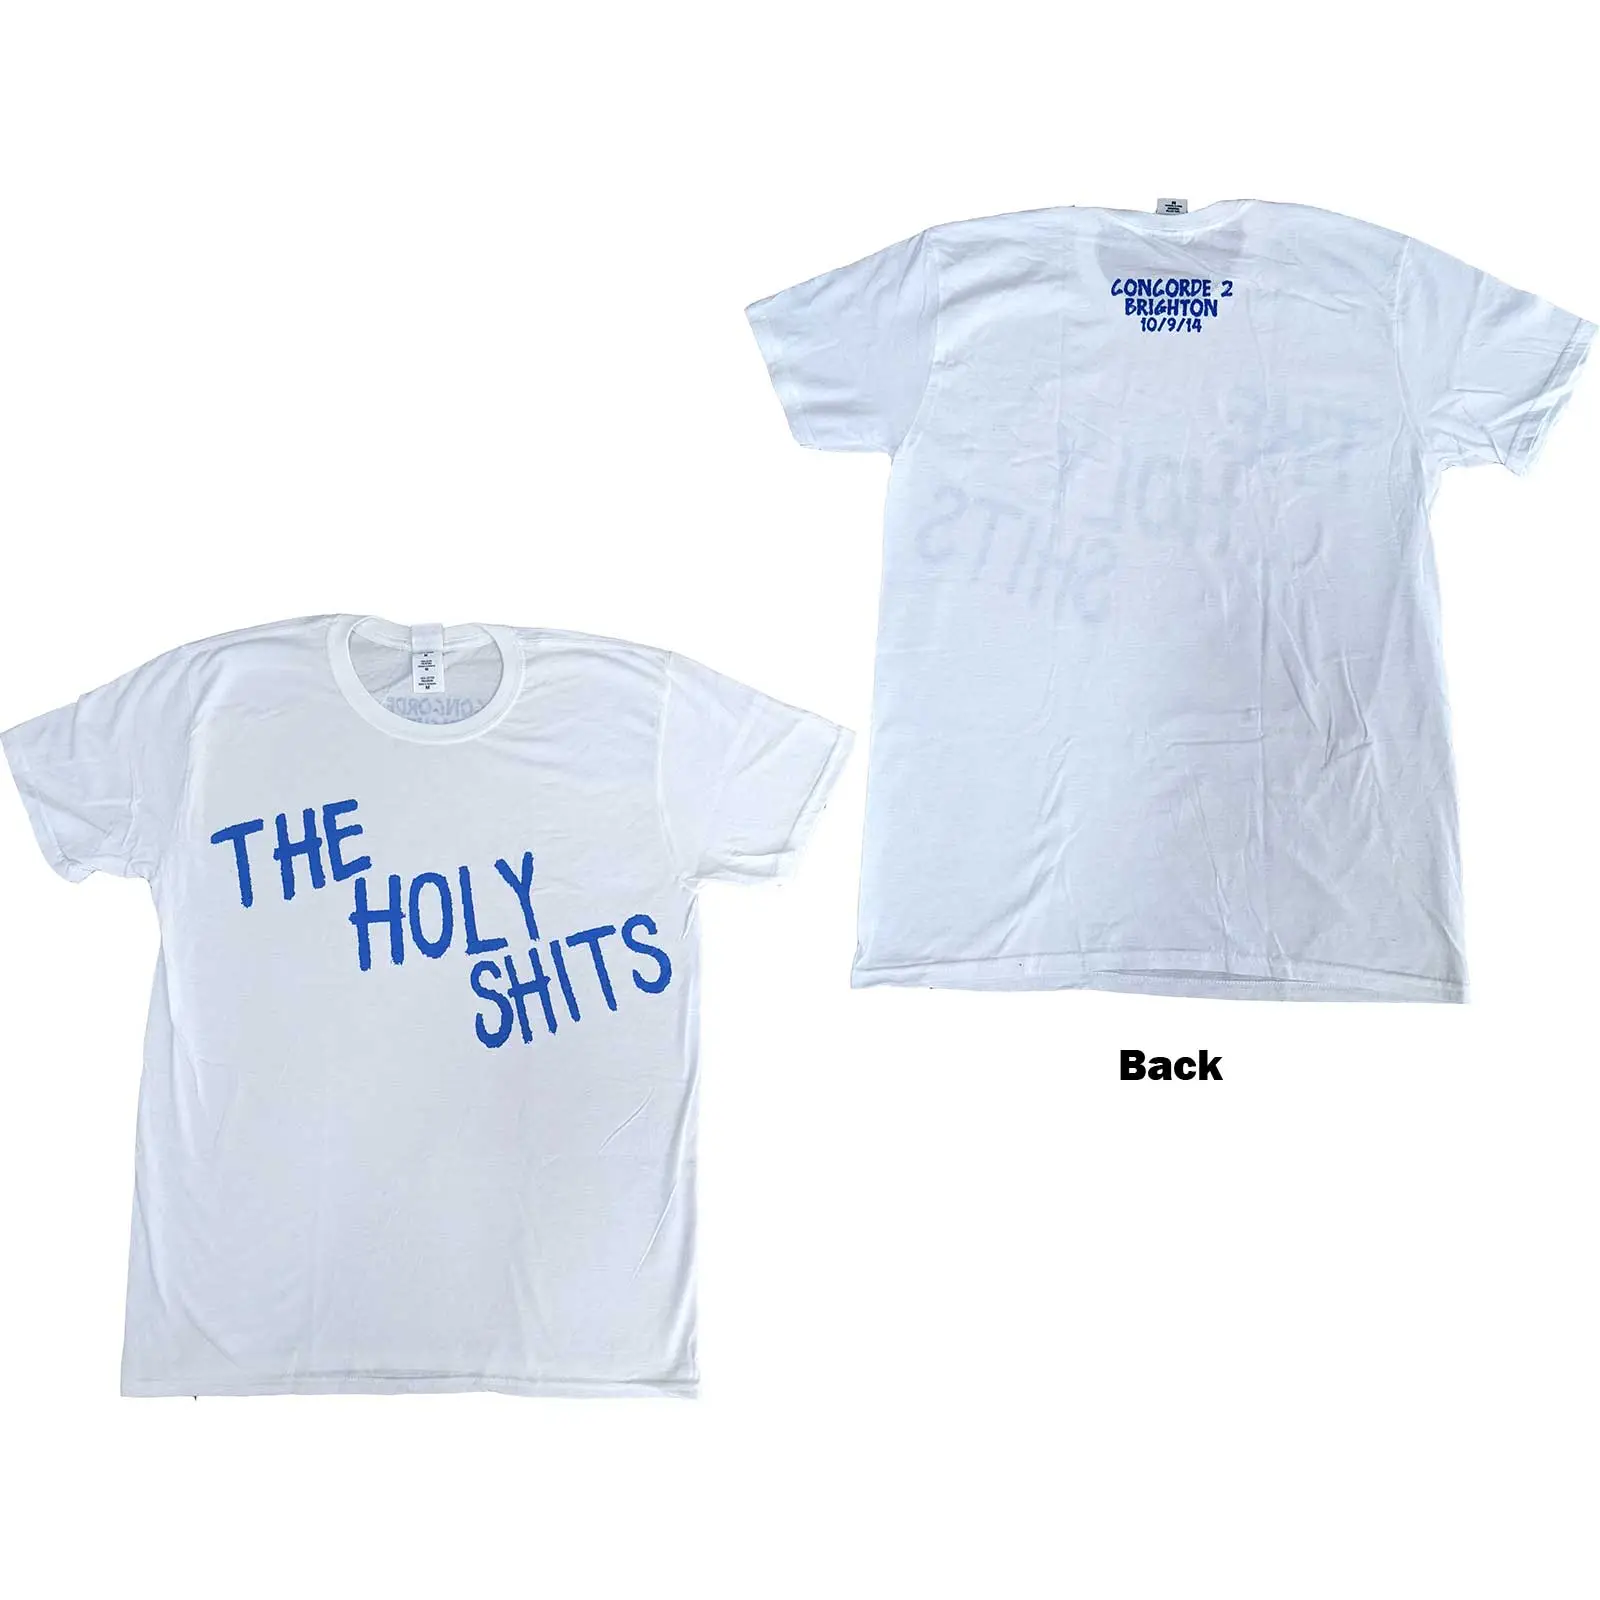 Foo Fighters - Unisex T-Shirt The Holy Shits Brighton 2014 Back Print artwork